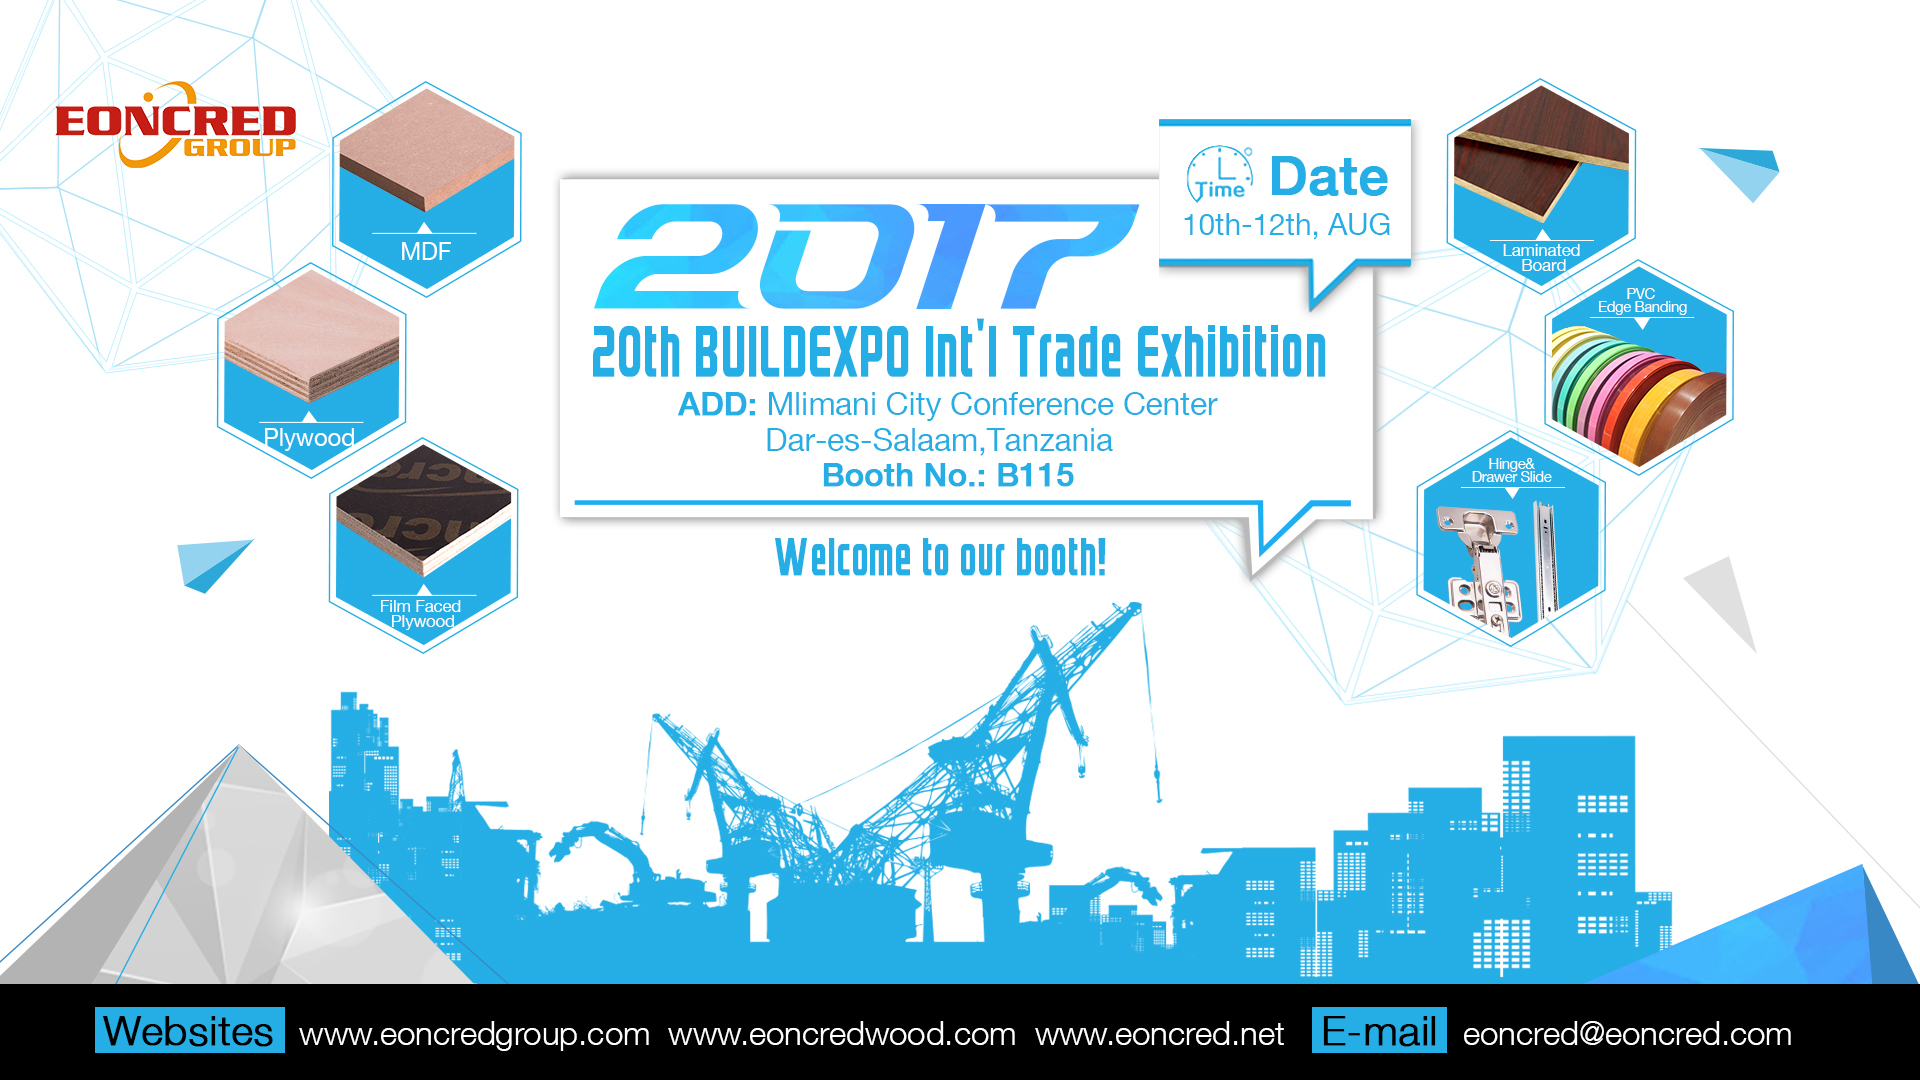 2017 20th BUILDEXPO Int'l Trade Exhibition